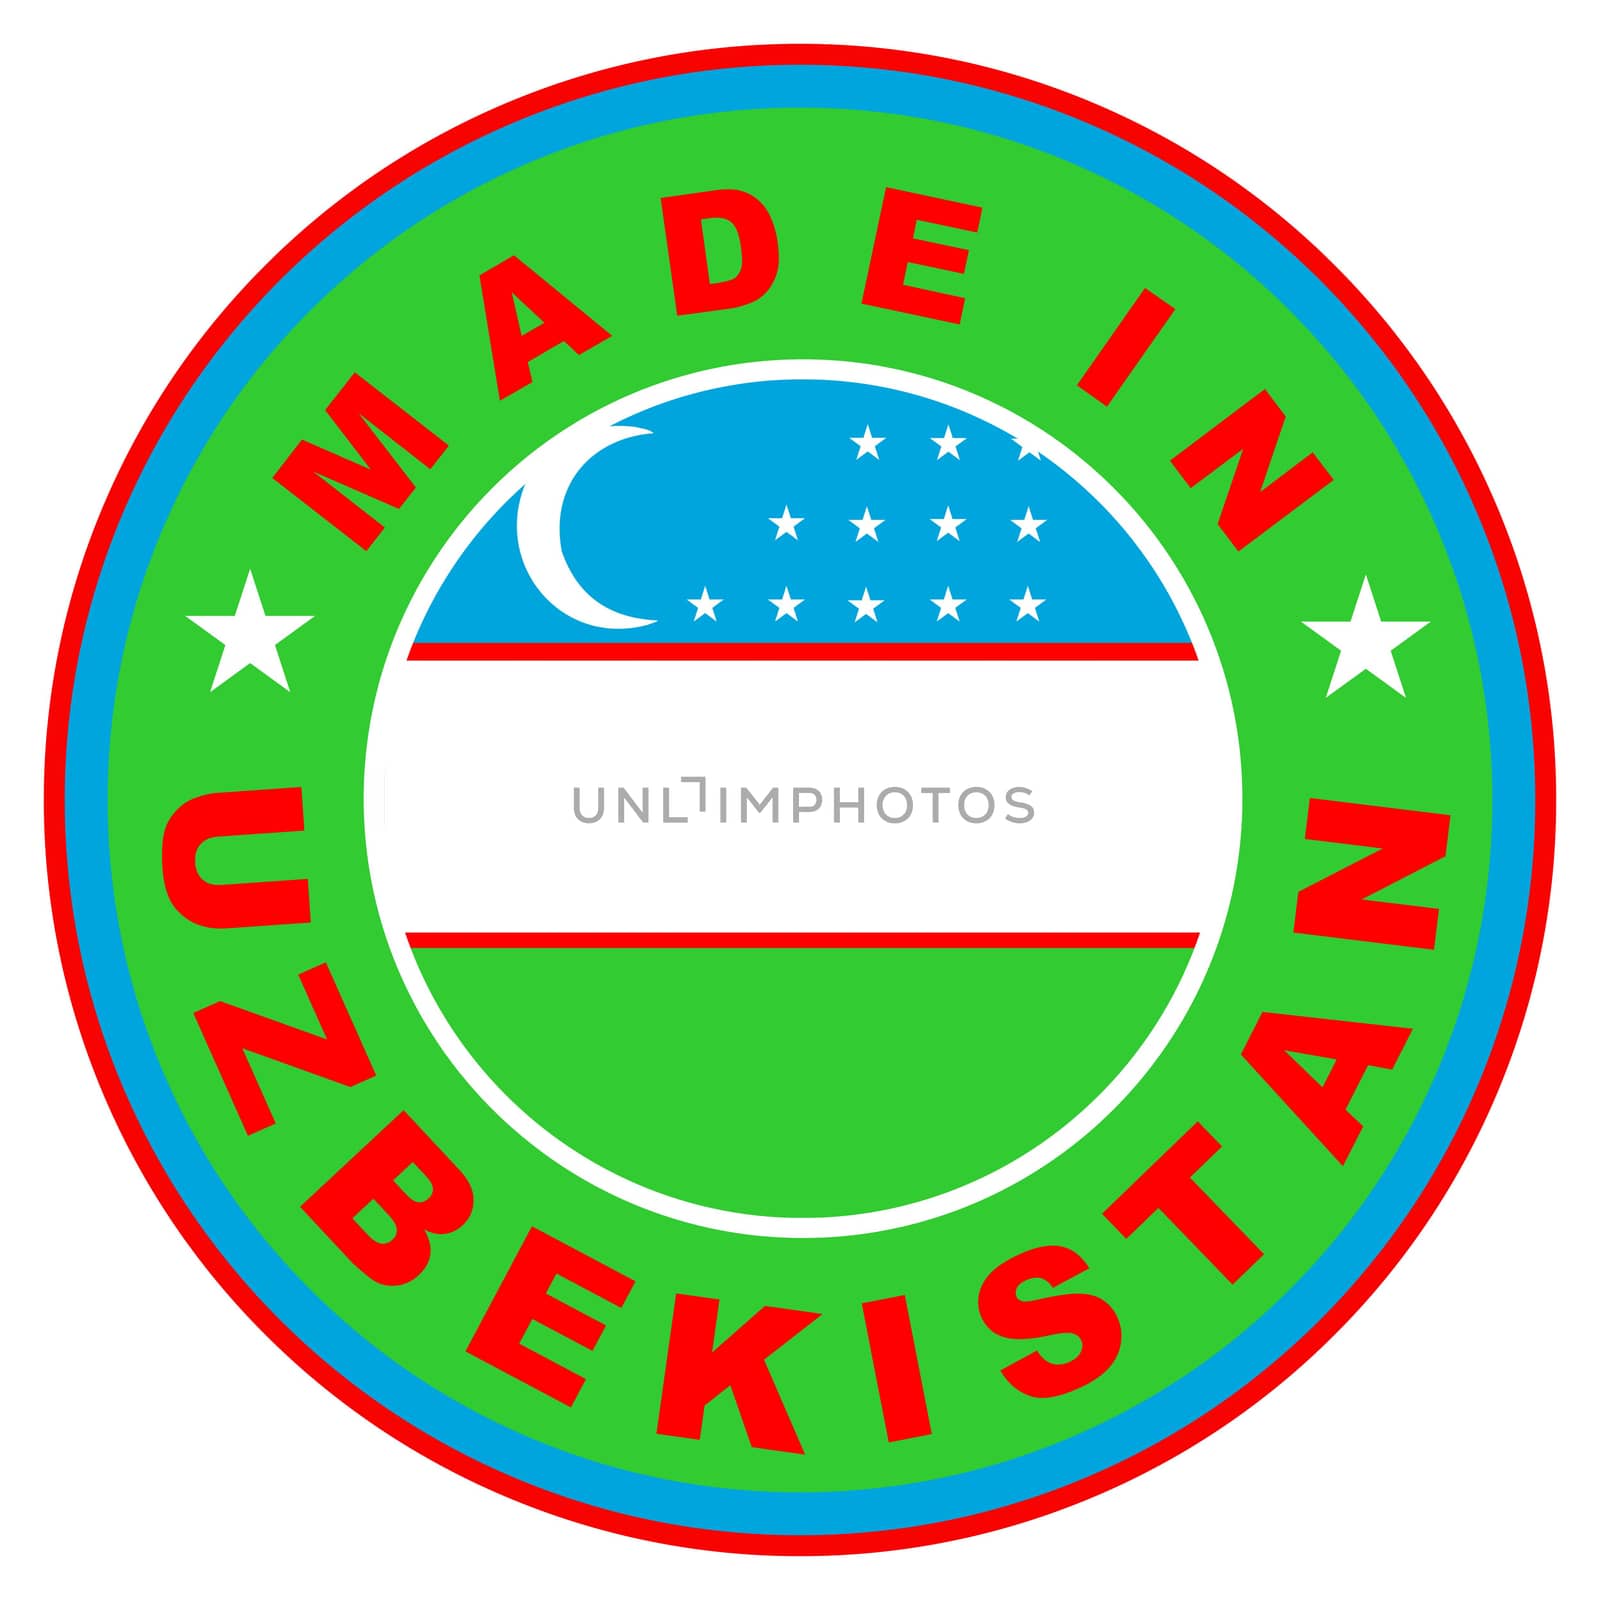 made in uzbekistan by tony4urban